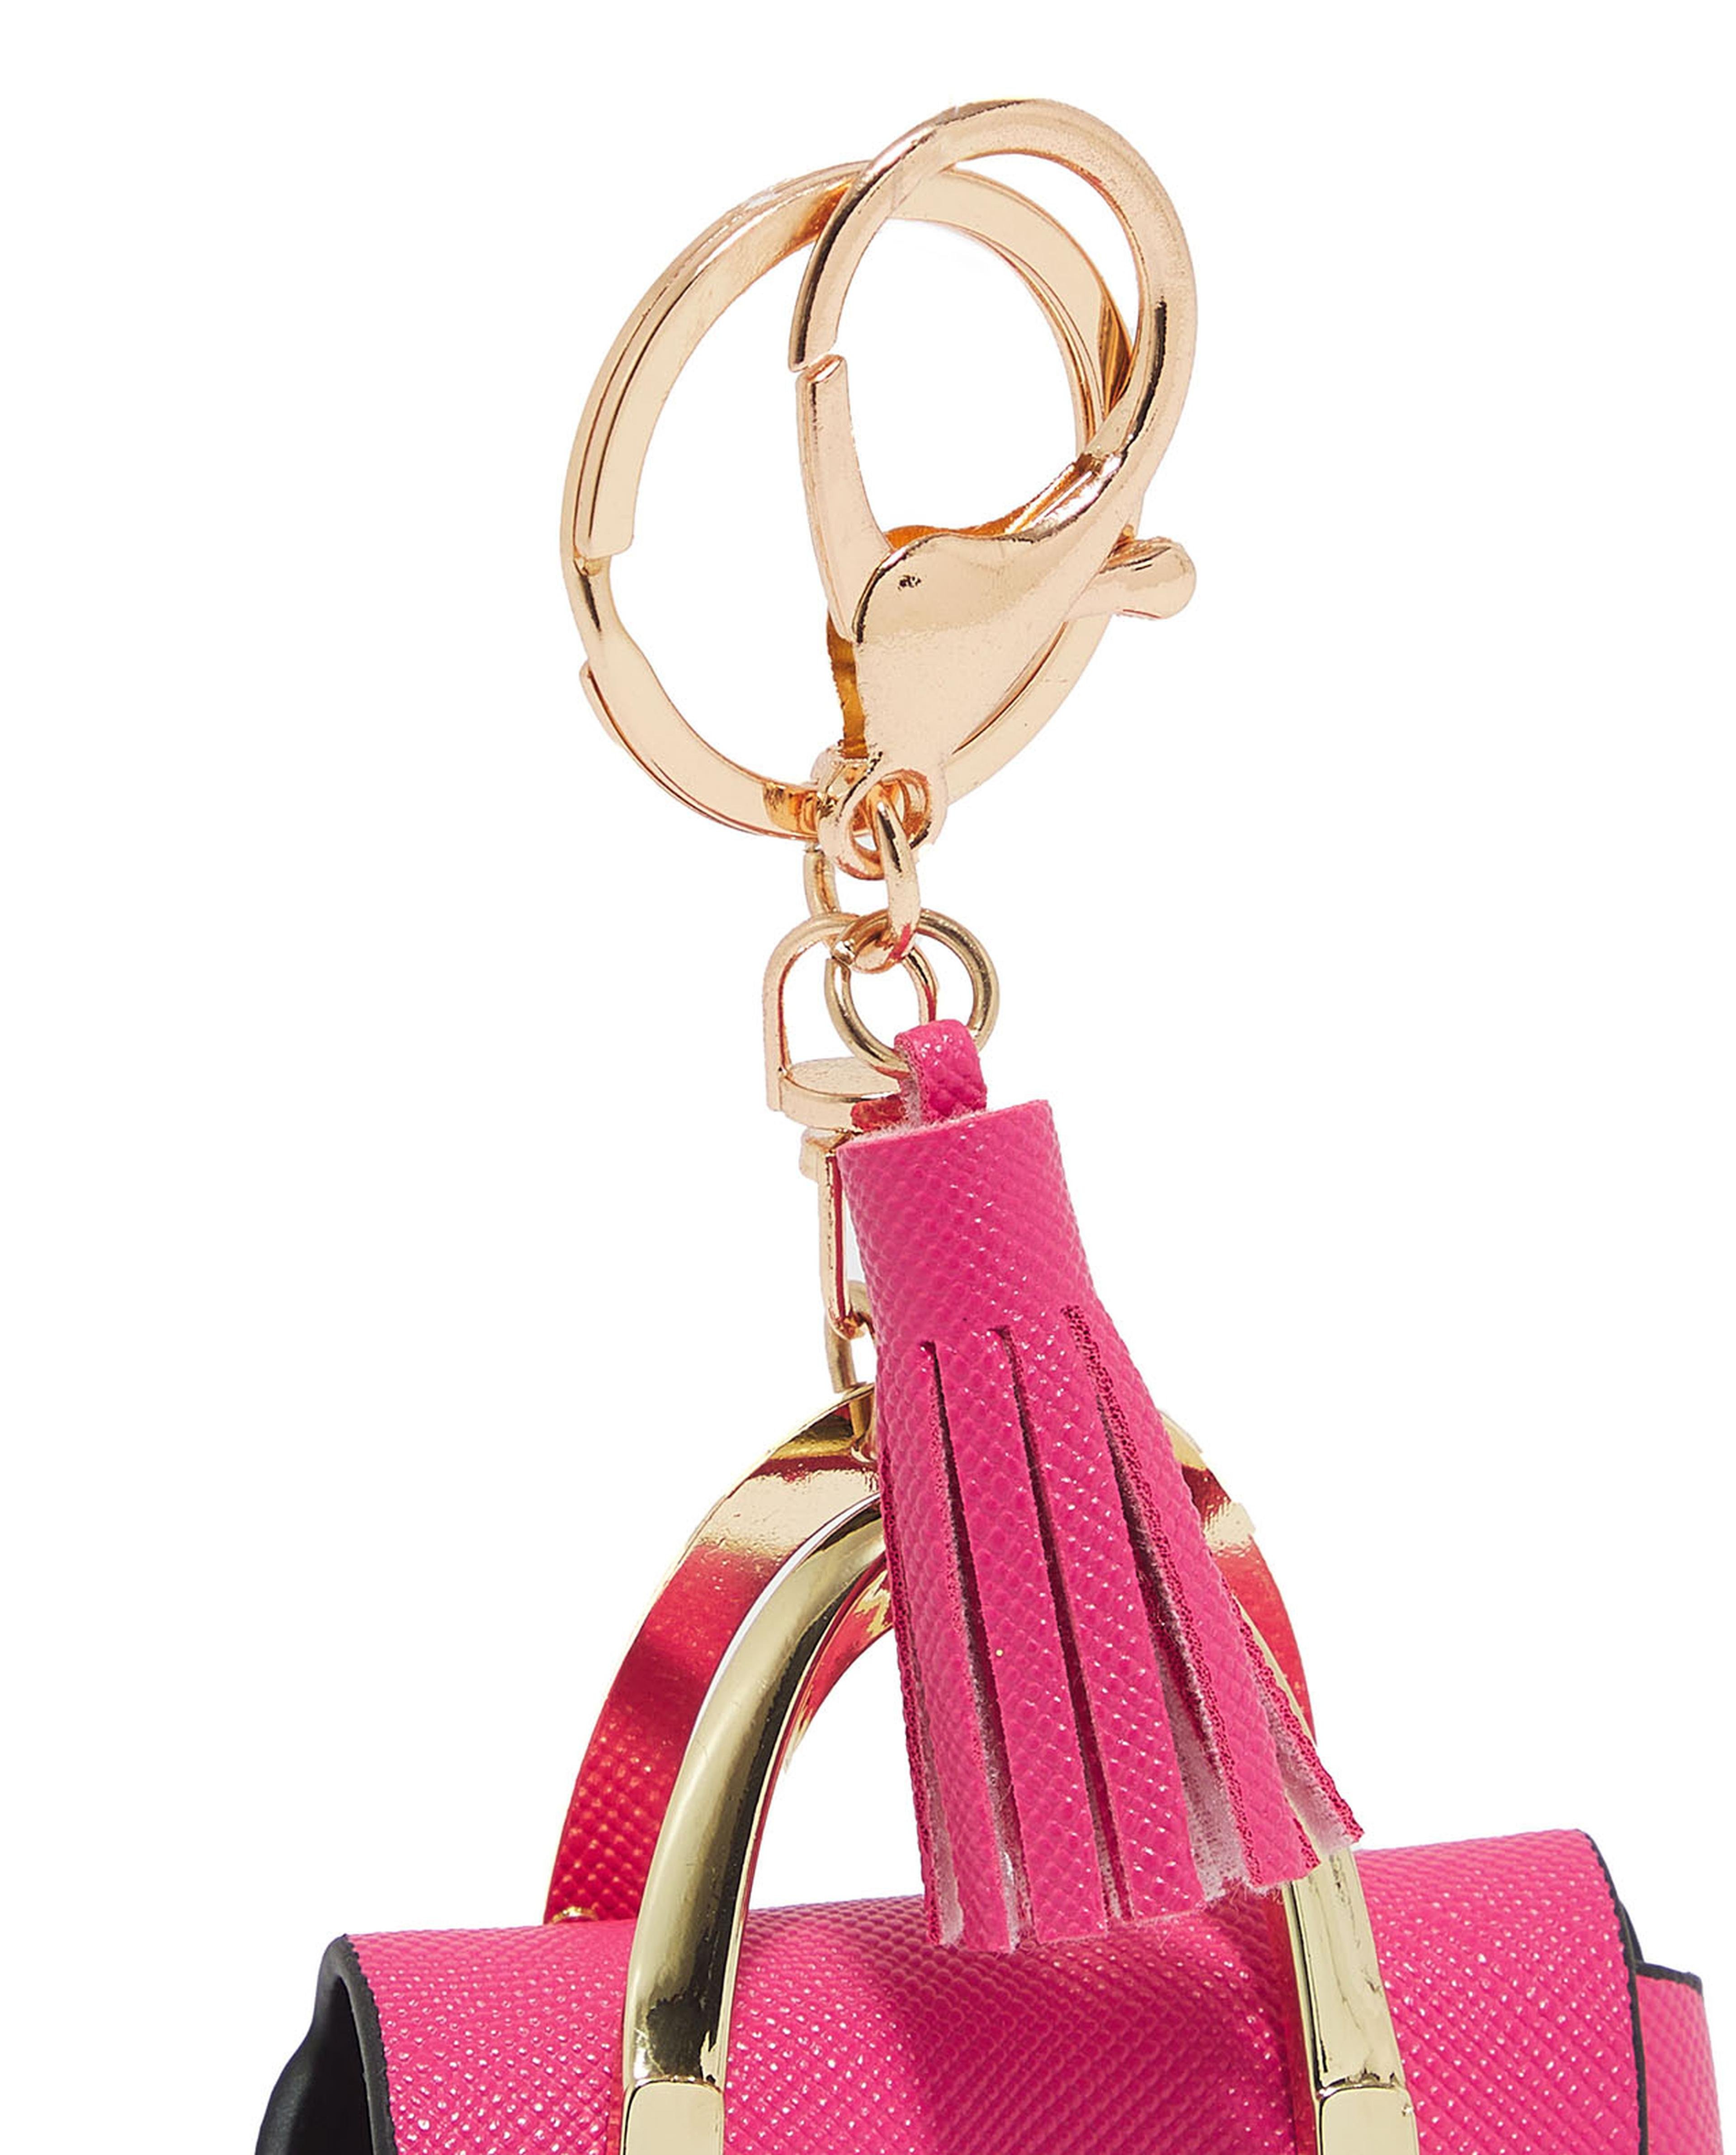 Handbag Charm Keychain